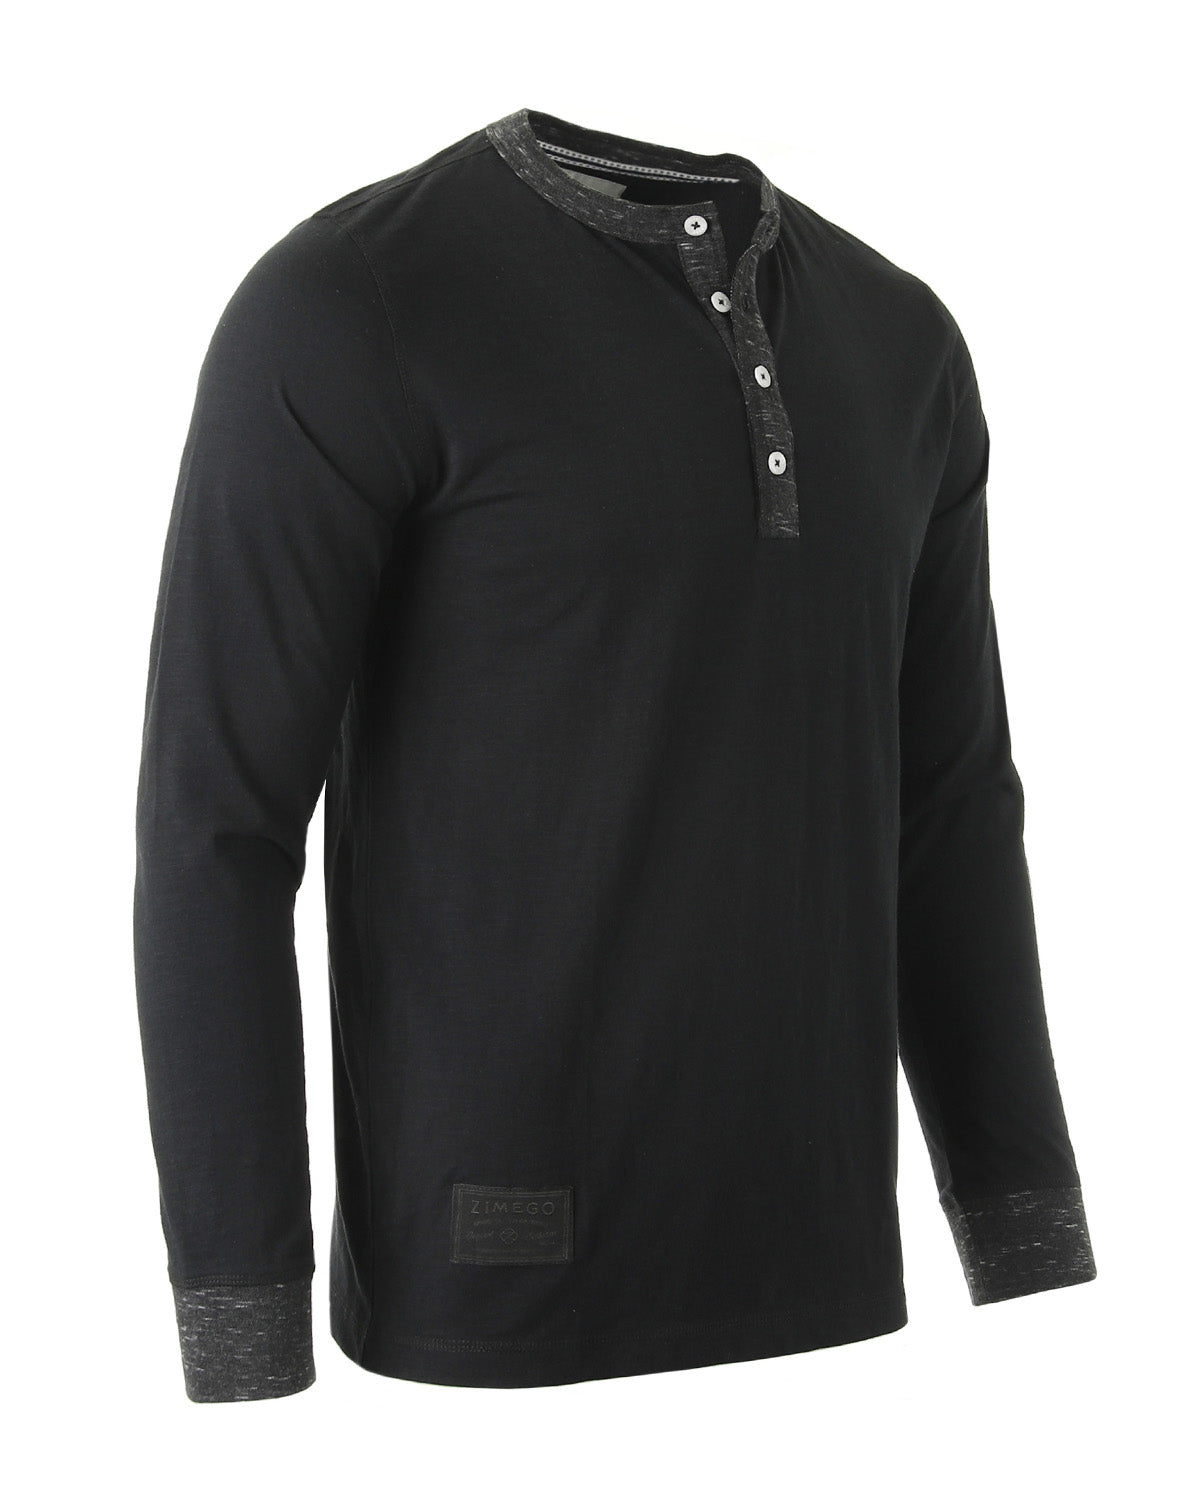 Men's Long Sleeve Contrast Button Placket Neck Cuffs Casual Henley Shirts